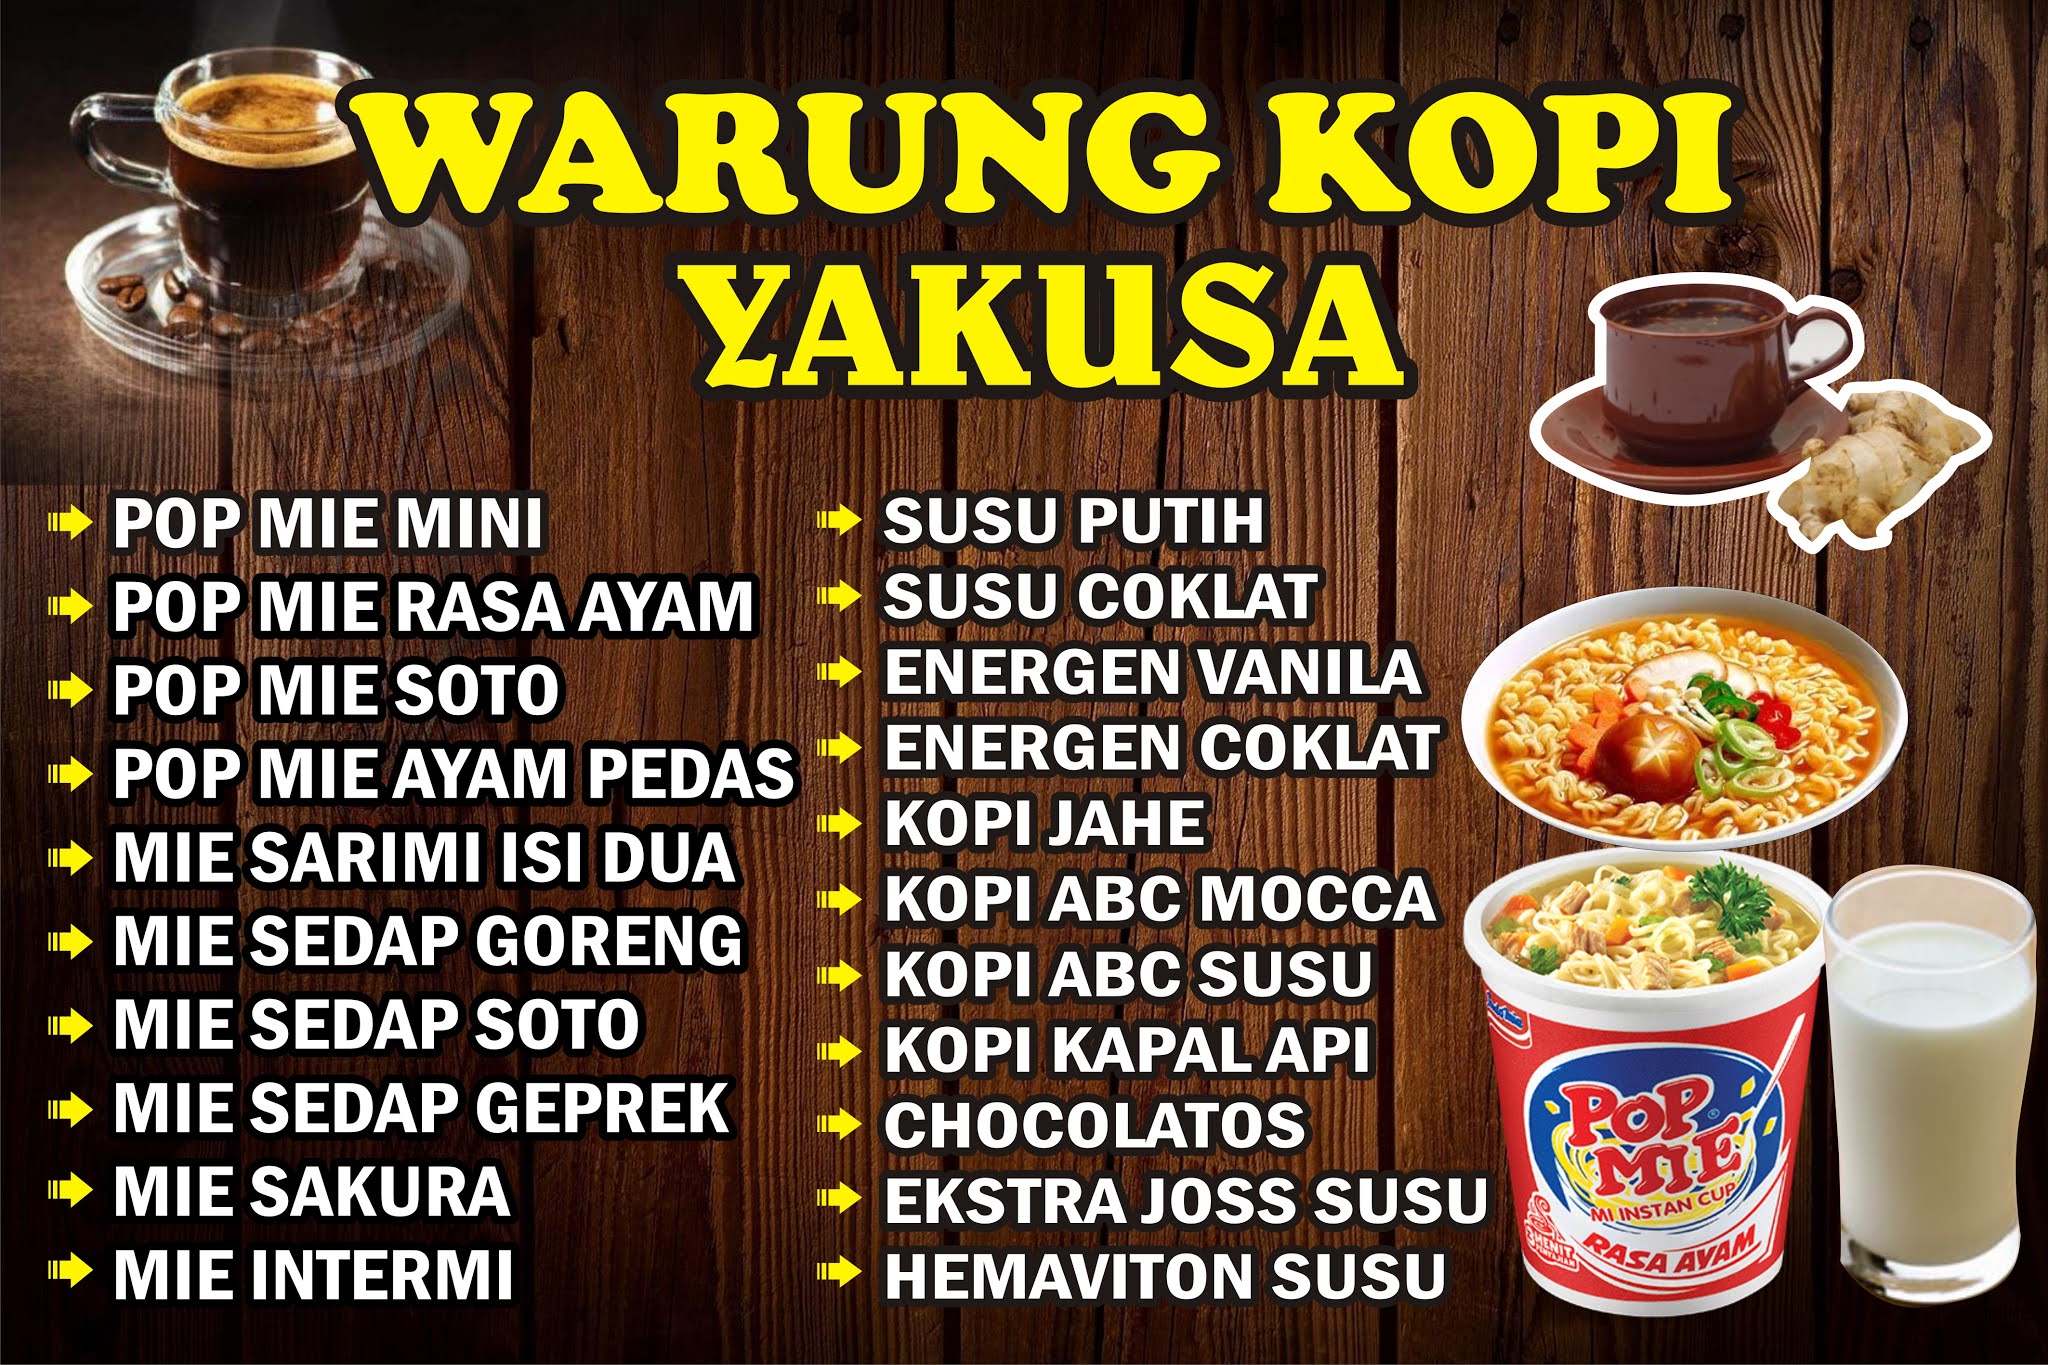 Warung Kopi mak kus - Coffee Shop Recommend!